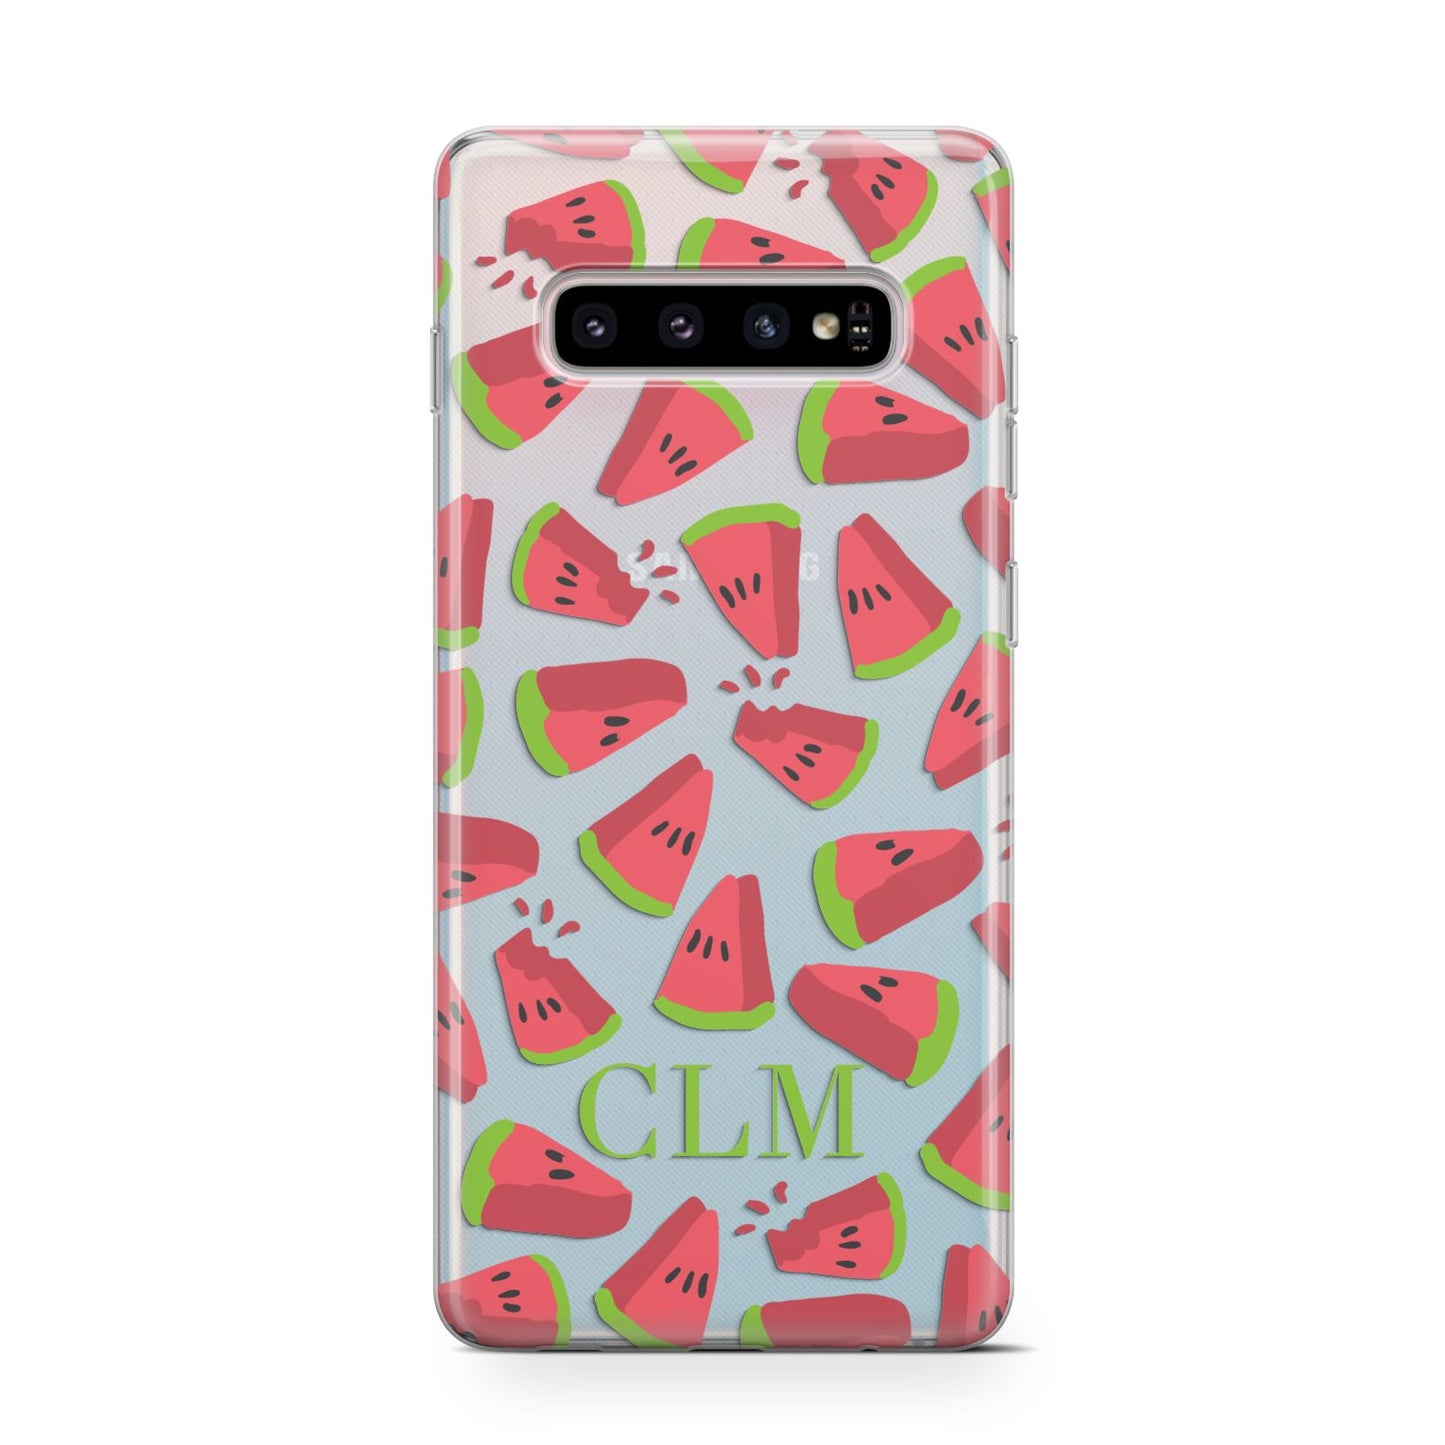 Personalised Watermelon Monogram Samsung Galaxy S10 Case